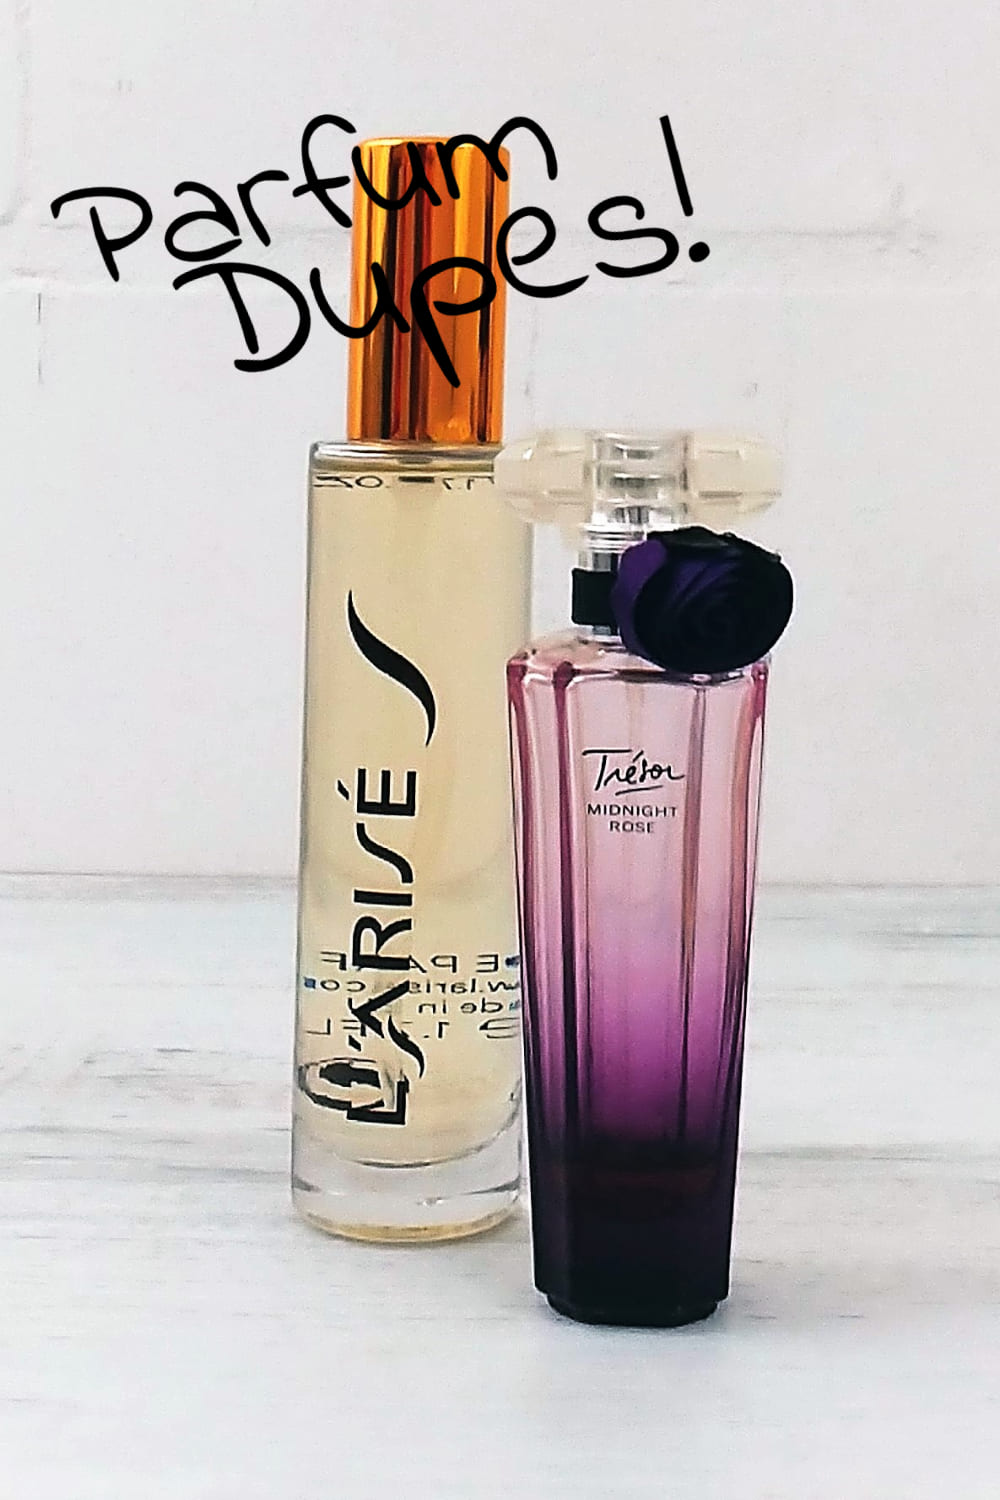 Parfum Dupes - Zwillingsduft neben dem original Duft